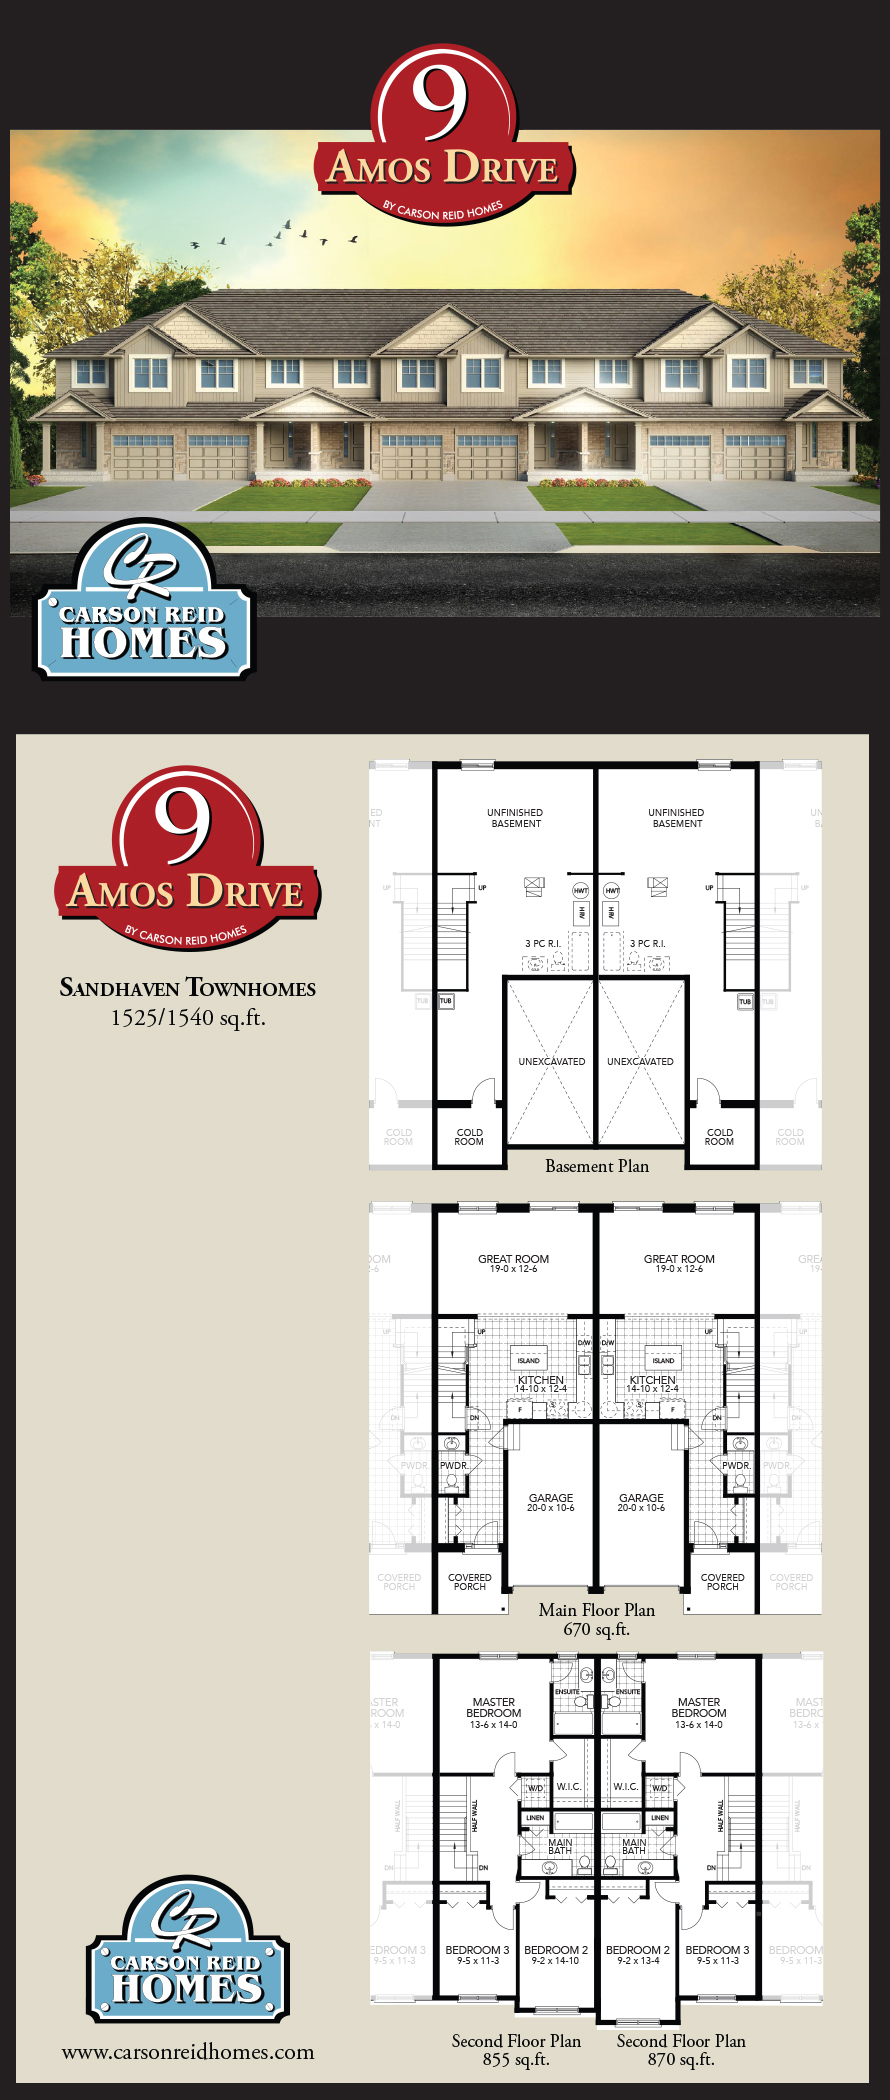 9 Amos Drive Home Design